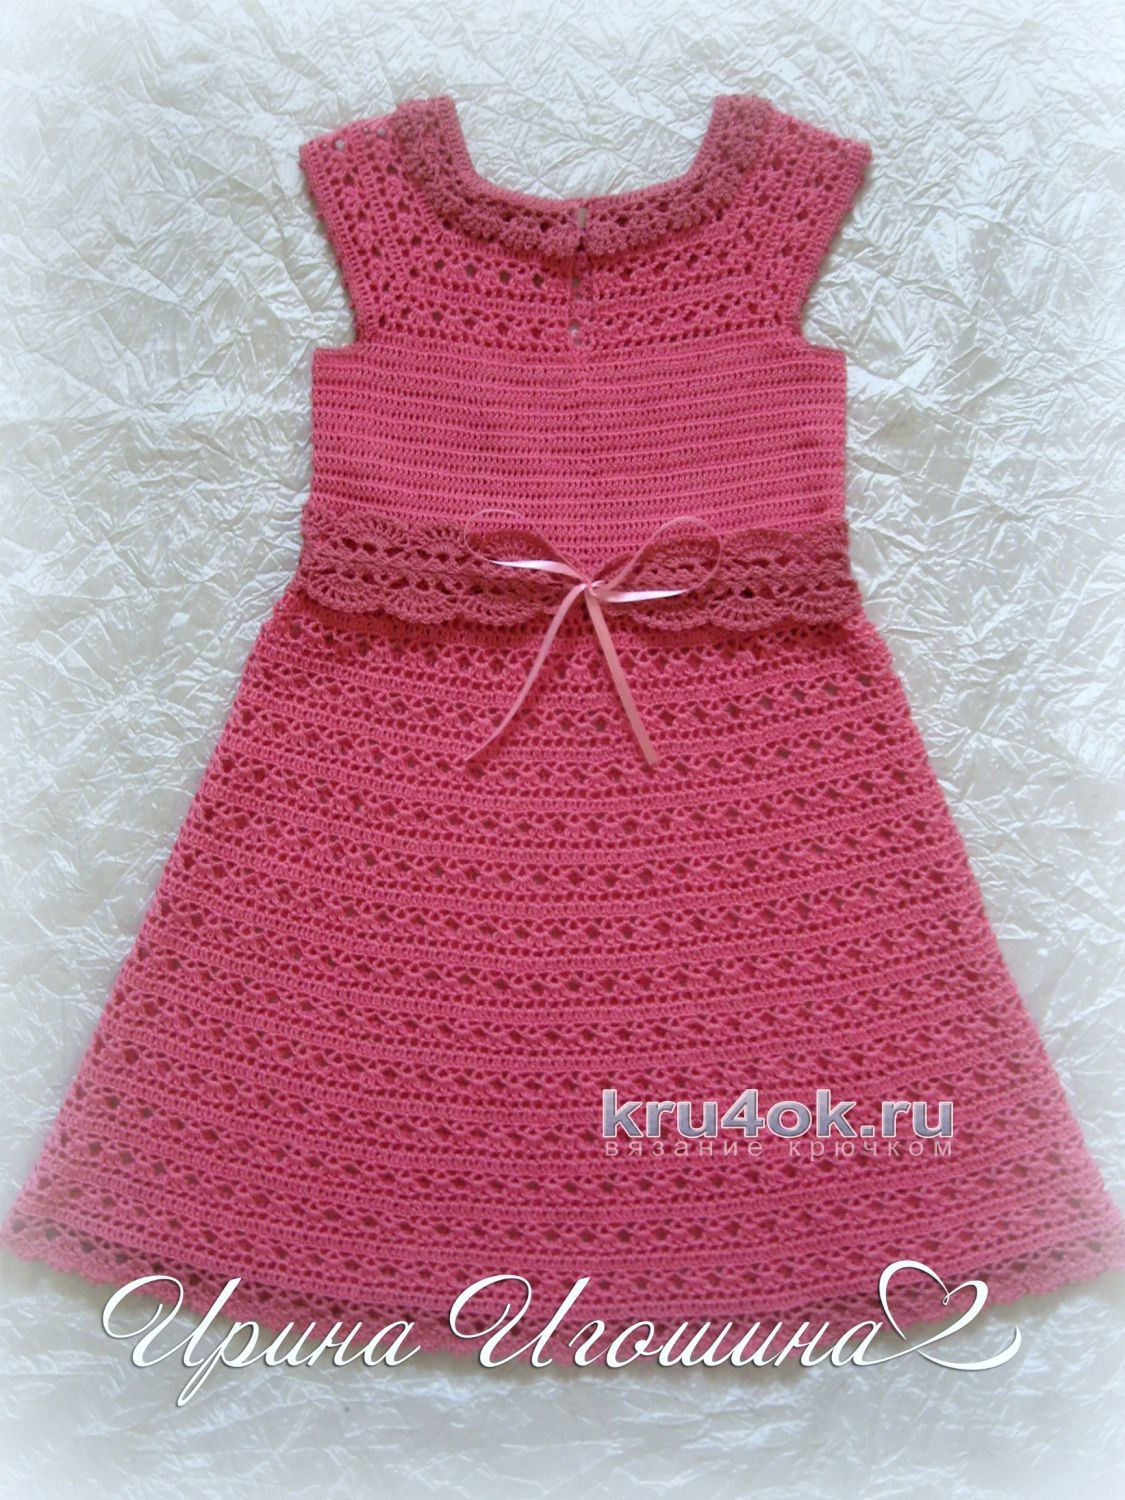 Crochet Baby Dress Free Pattern Free Crochet Patterns To Download